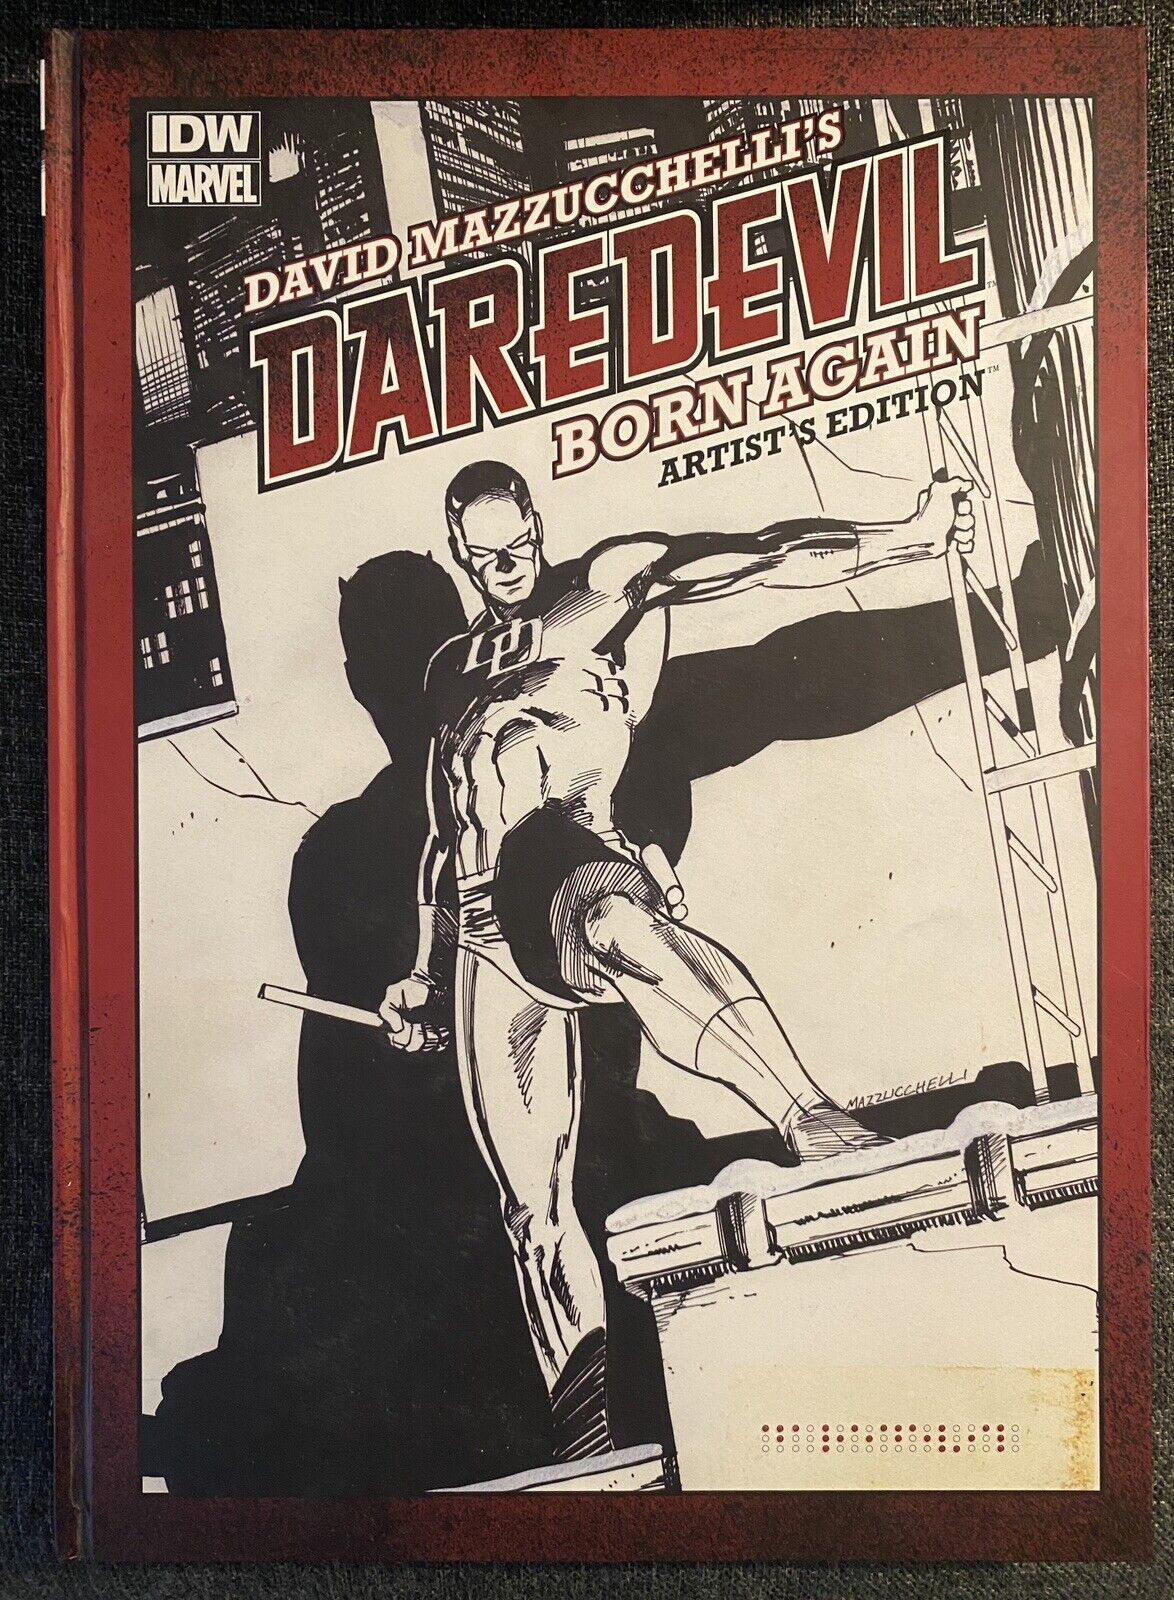 Daredevil: Born Again - Artist’s Edition #1 (IDW Publishing) Hardcover